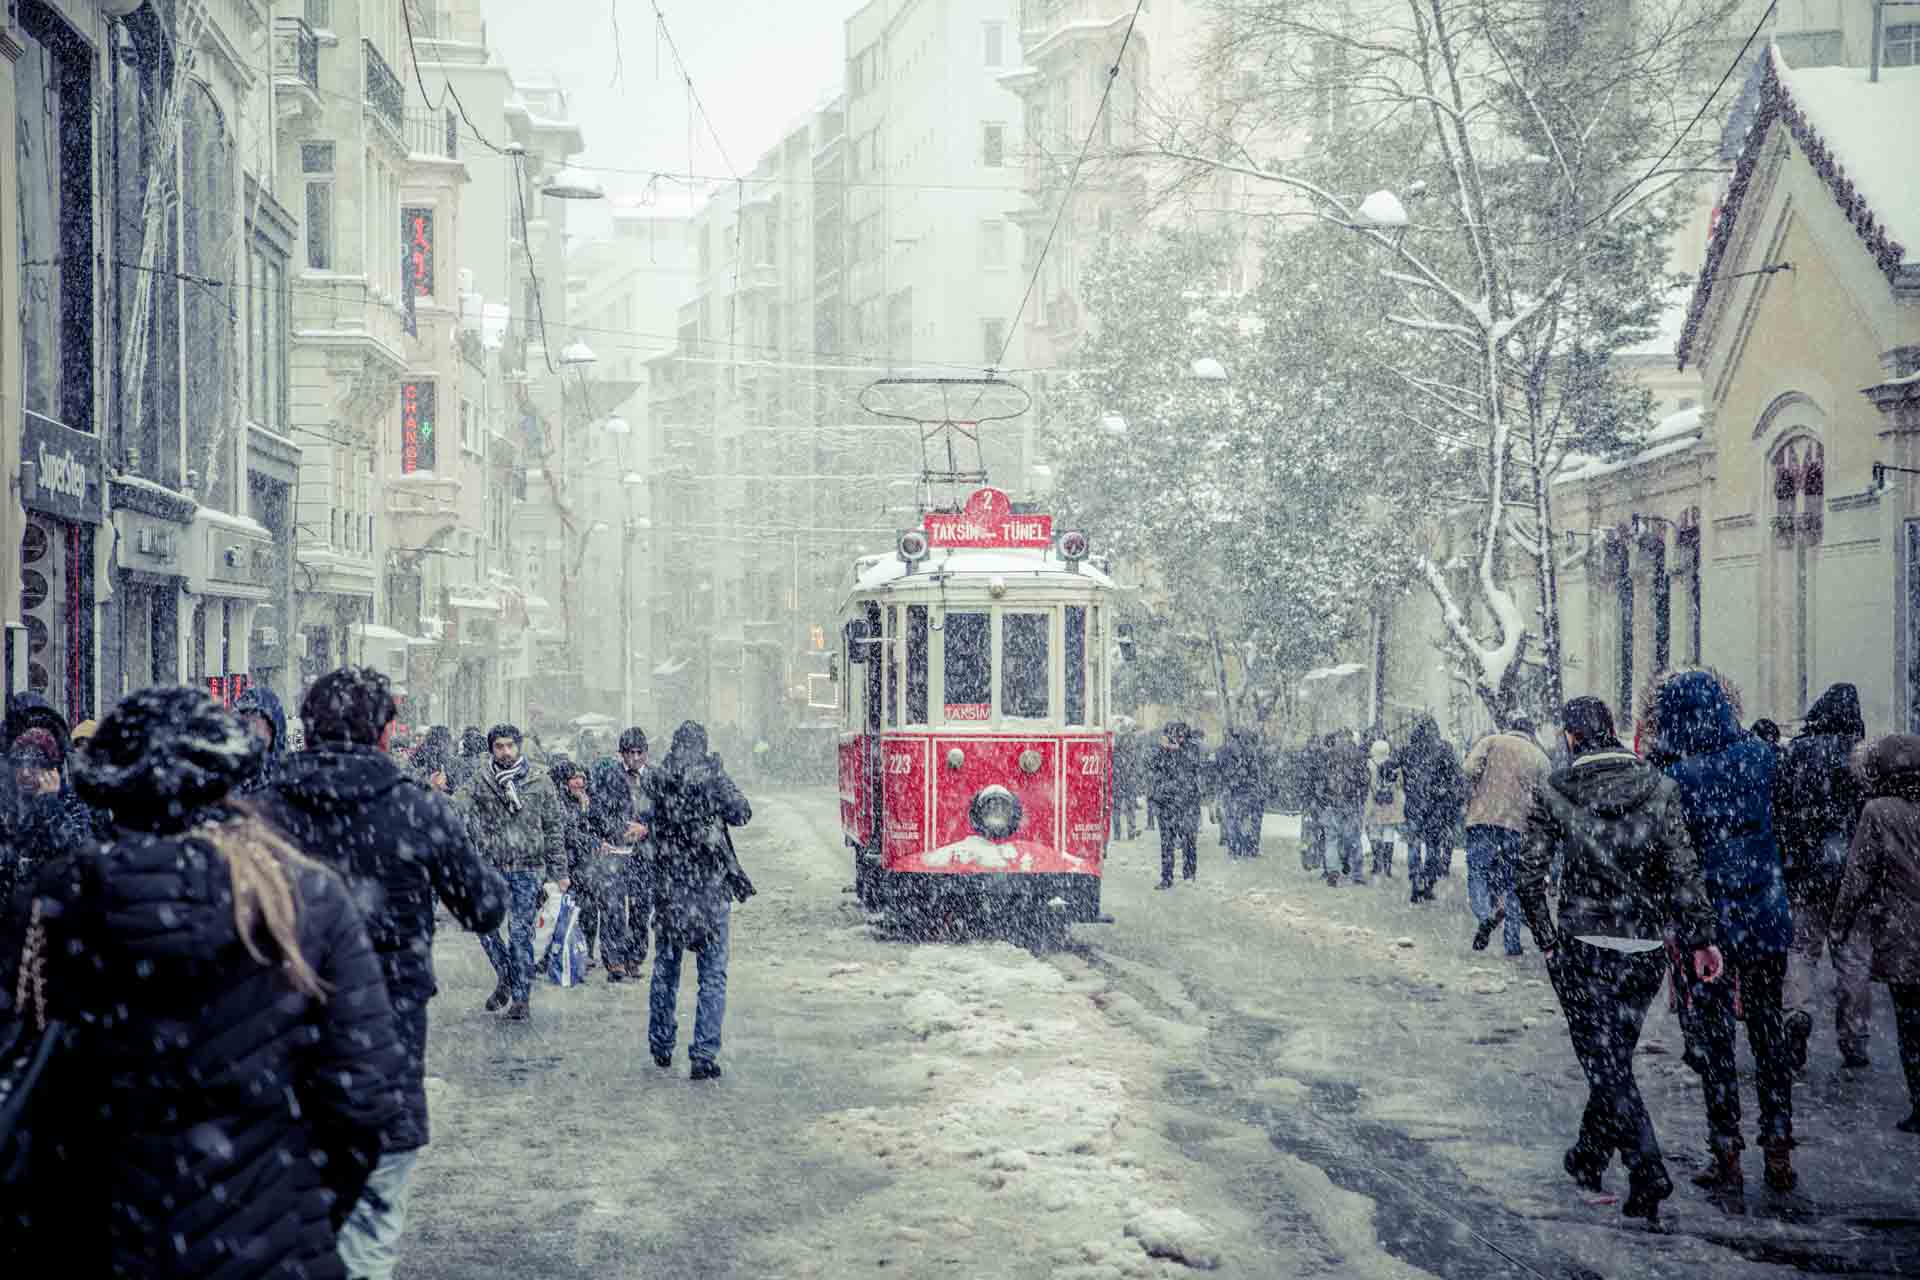 Trolley in Istanbul, Turkey during rare snow storm photo by Olga Gamburg